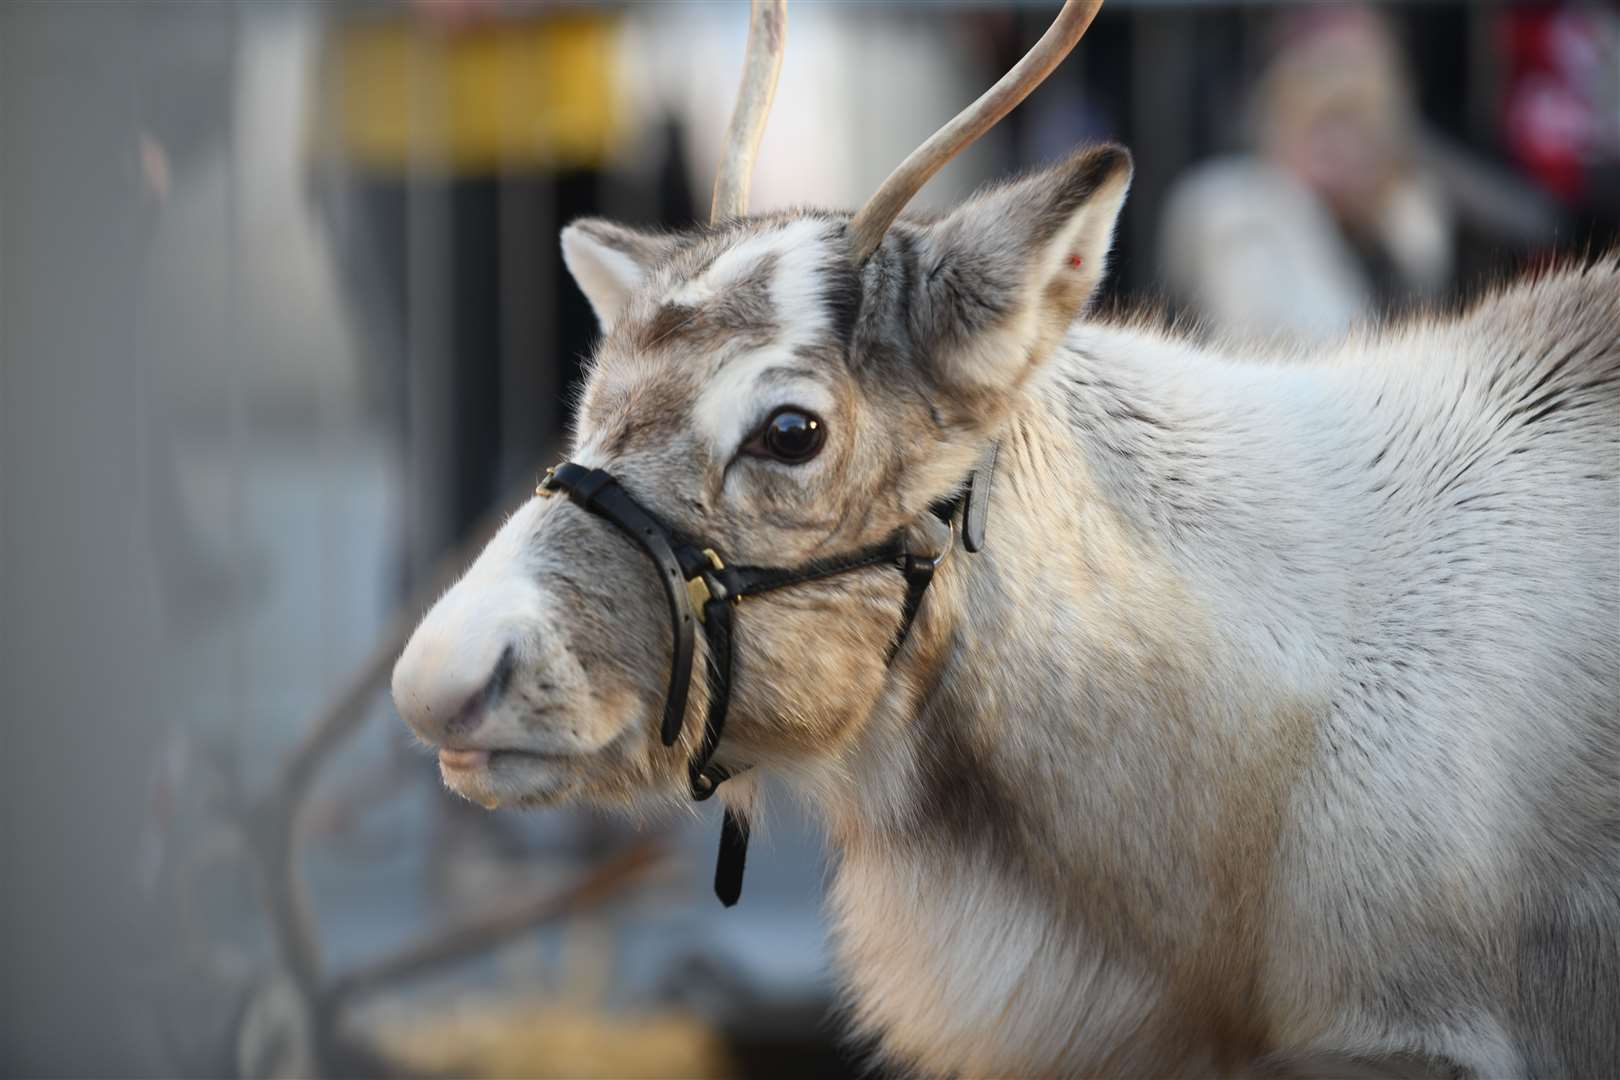 Magnum the reindeer. Picture: James Mackenzie